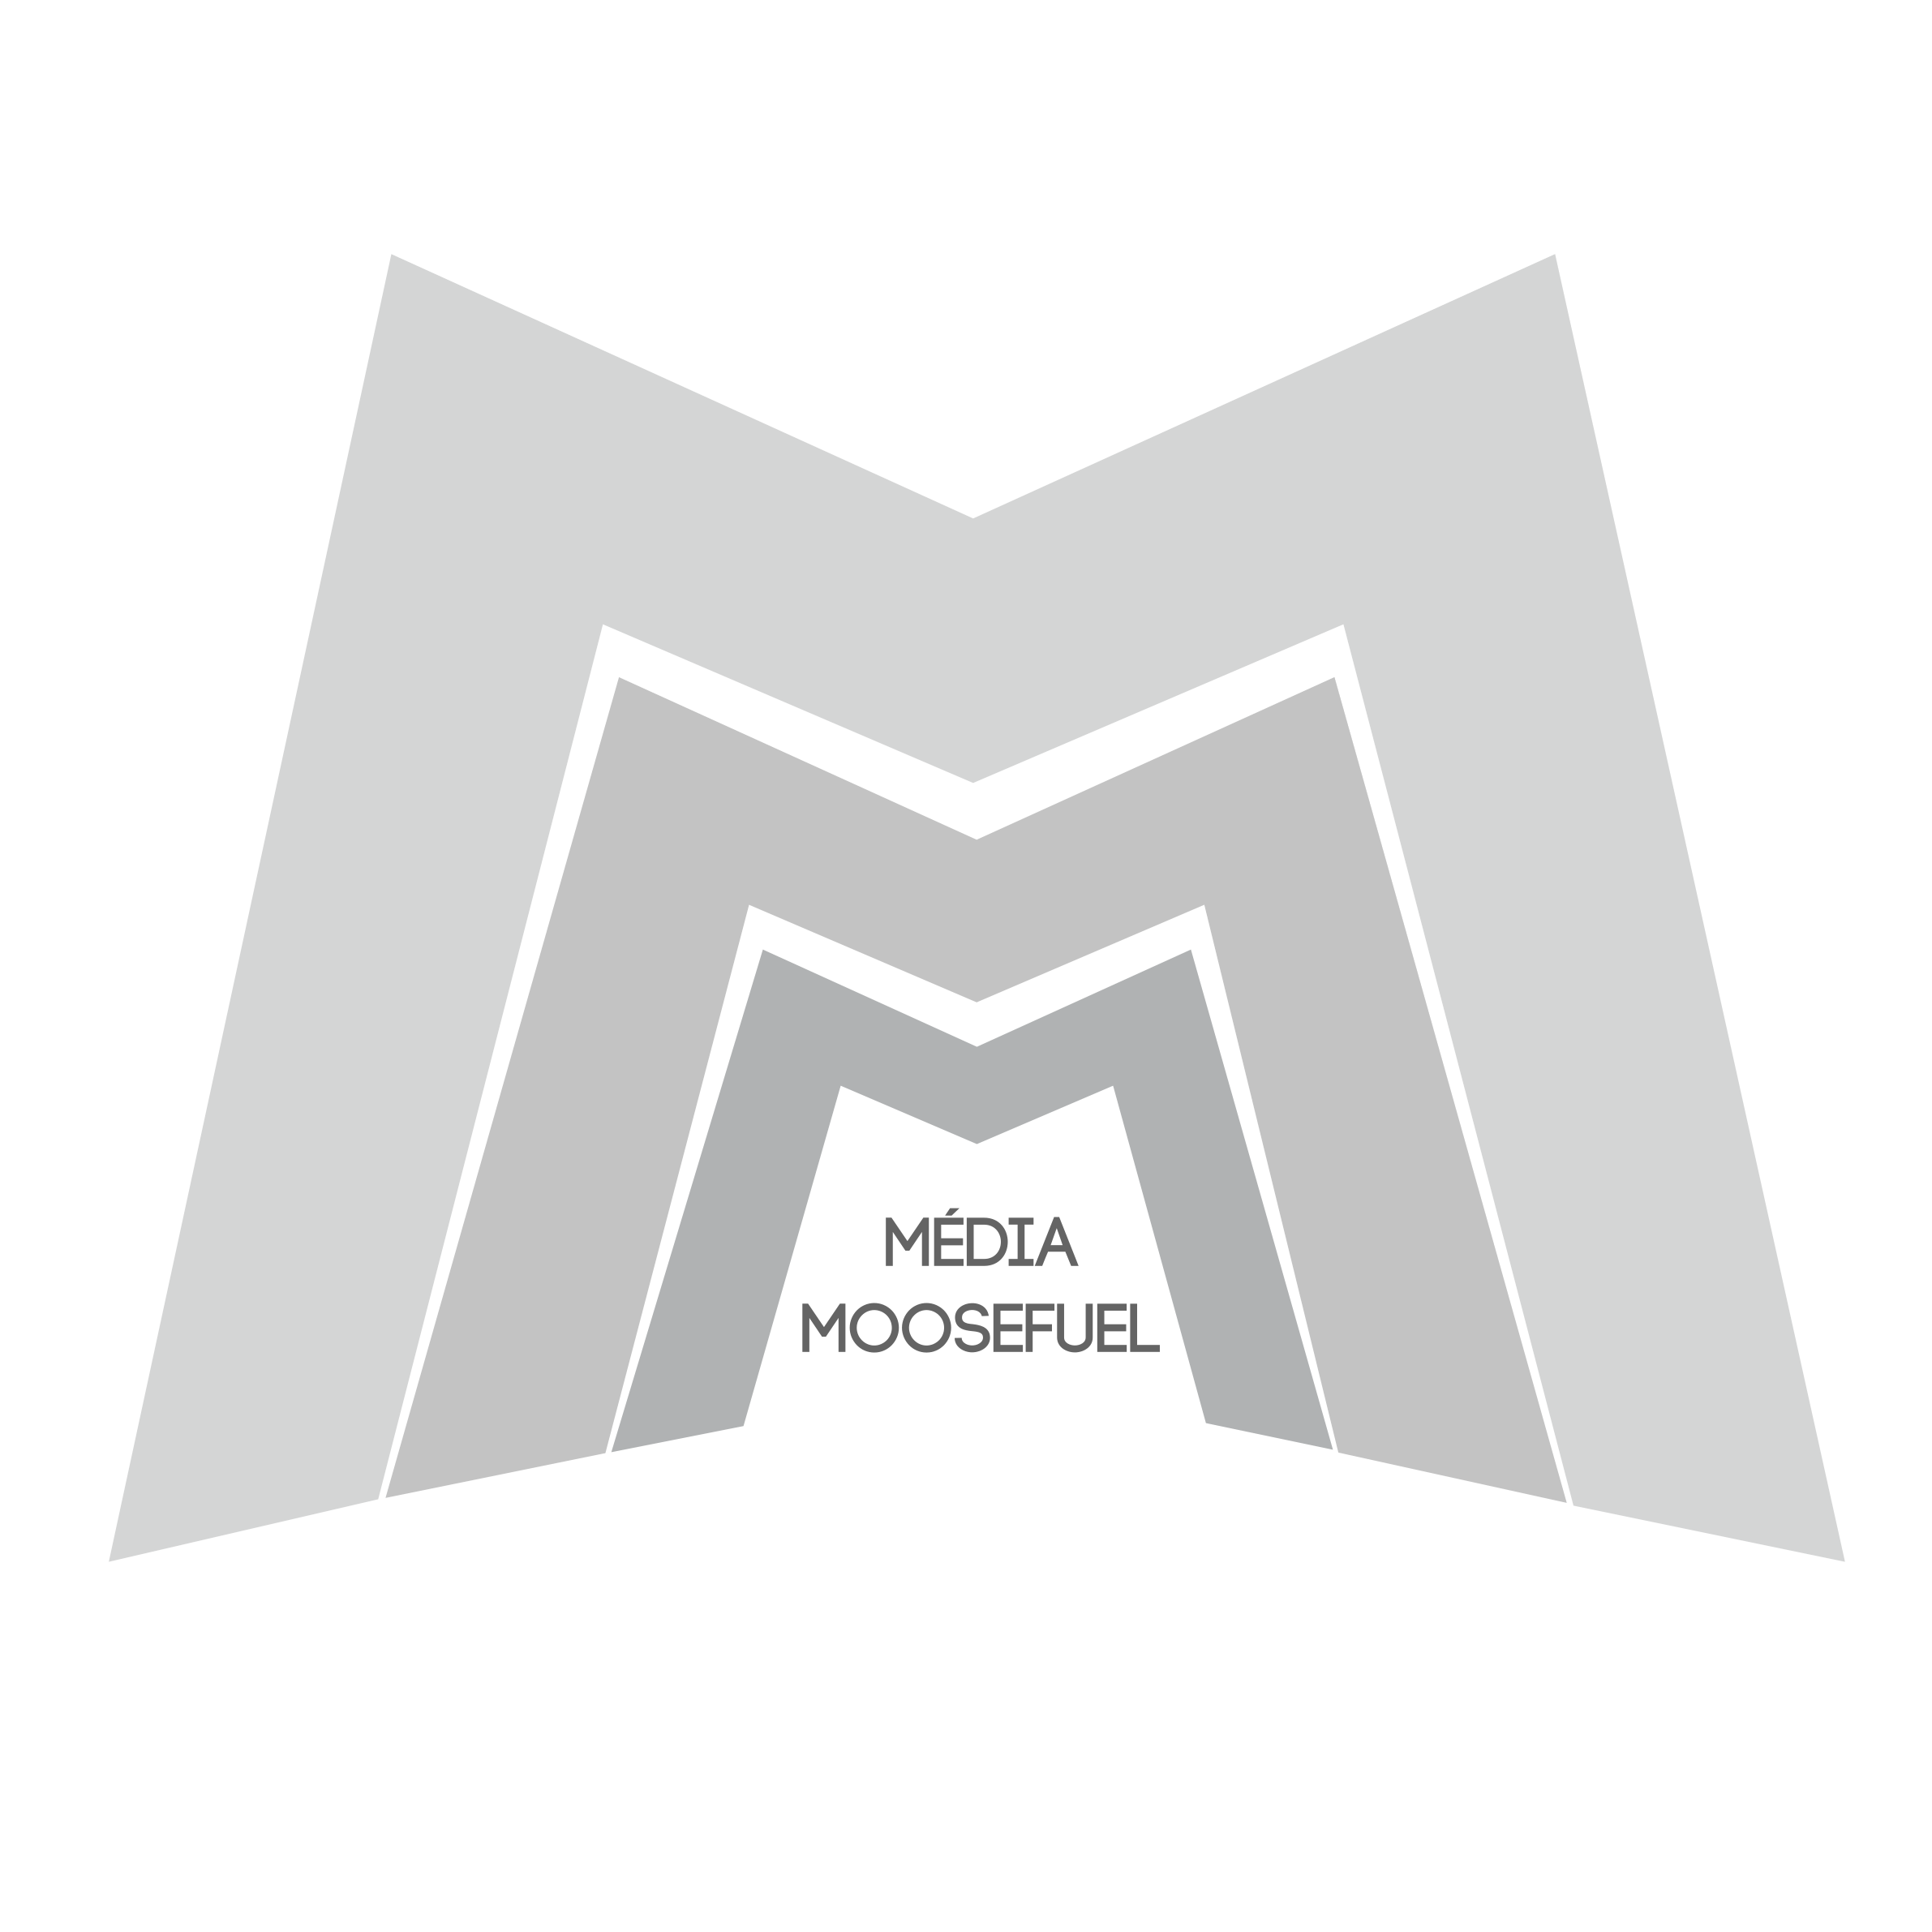 Media Moosefuel Logo